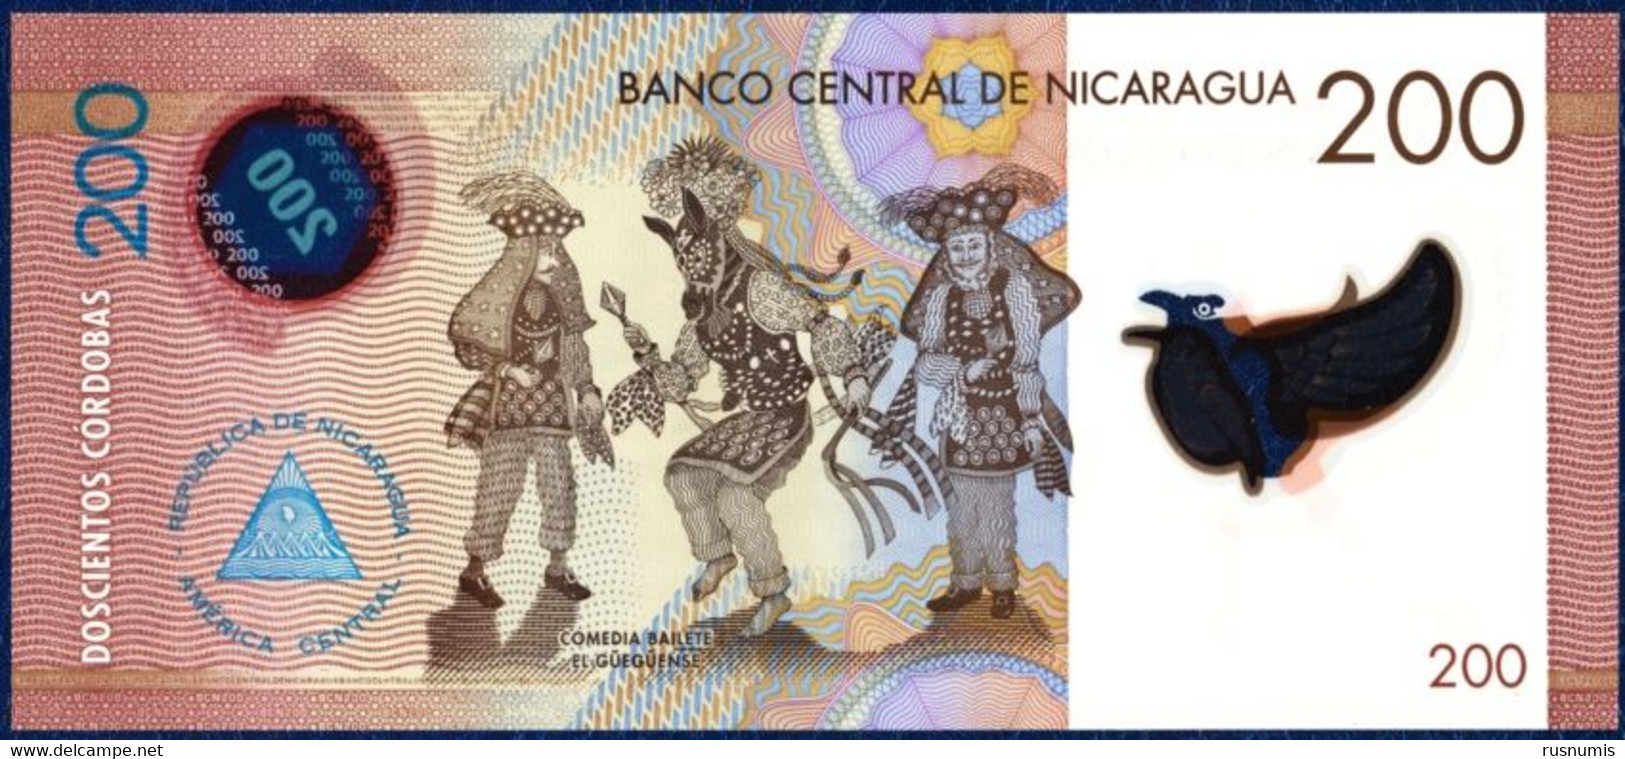 NICARAGUA 200 CORDOBAS POLYMER P-213 NATIONAL THEATRE BIRD - El Güegüense Comedy Ballet 2014 UNC - Nicaragua